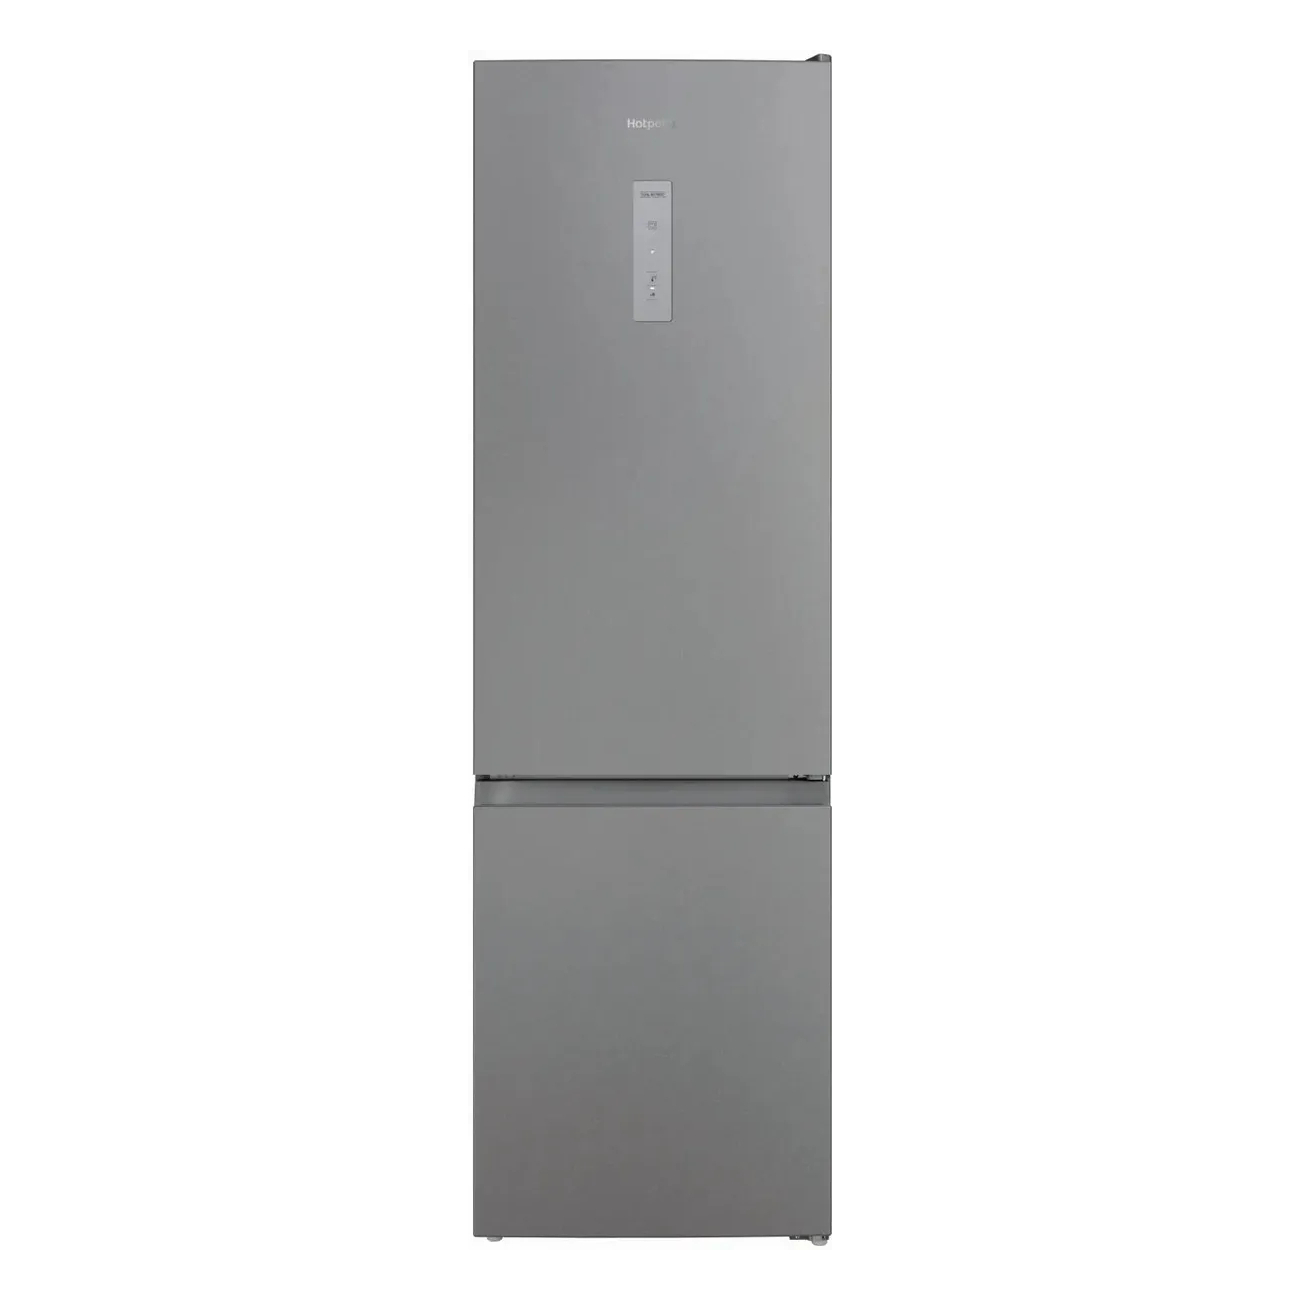 Холодильник HotPoint HT 5200 S серебристый двухкамерный холодильник hotpoint hts 4180 s серебристый